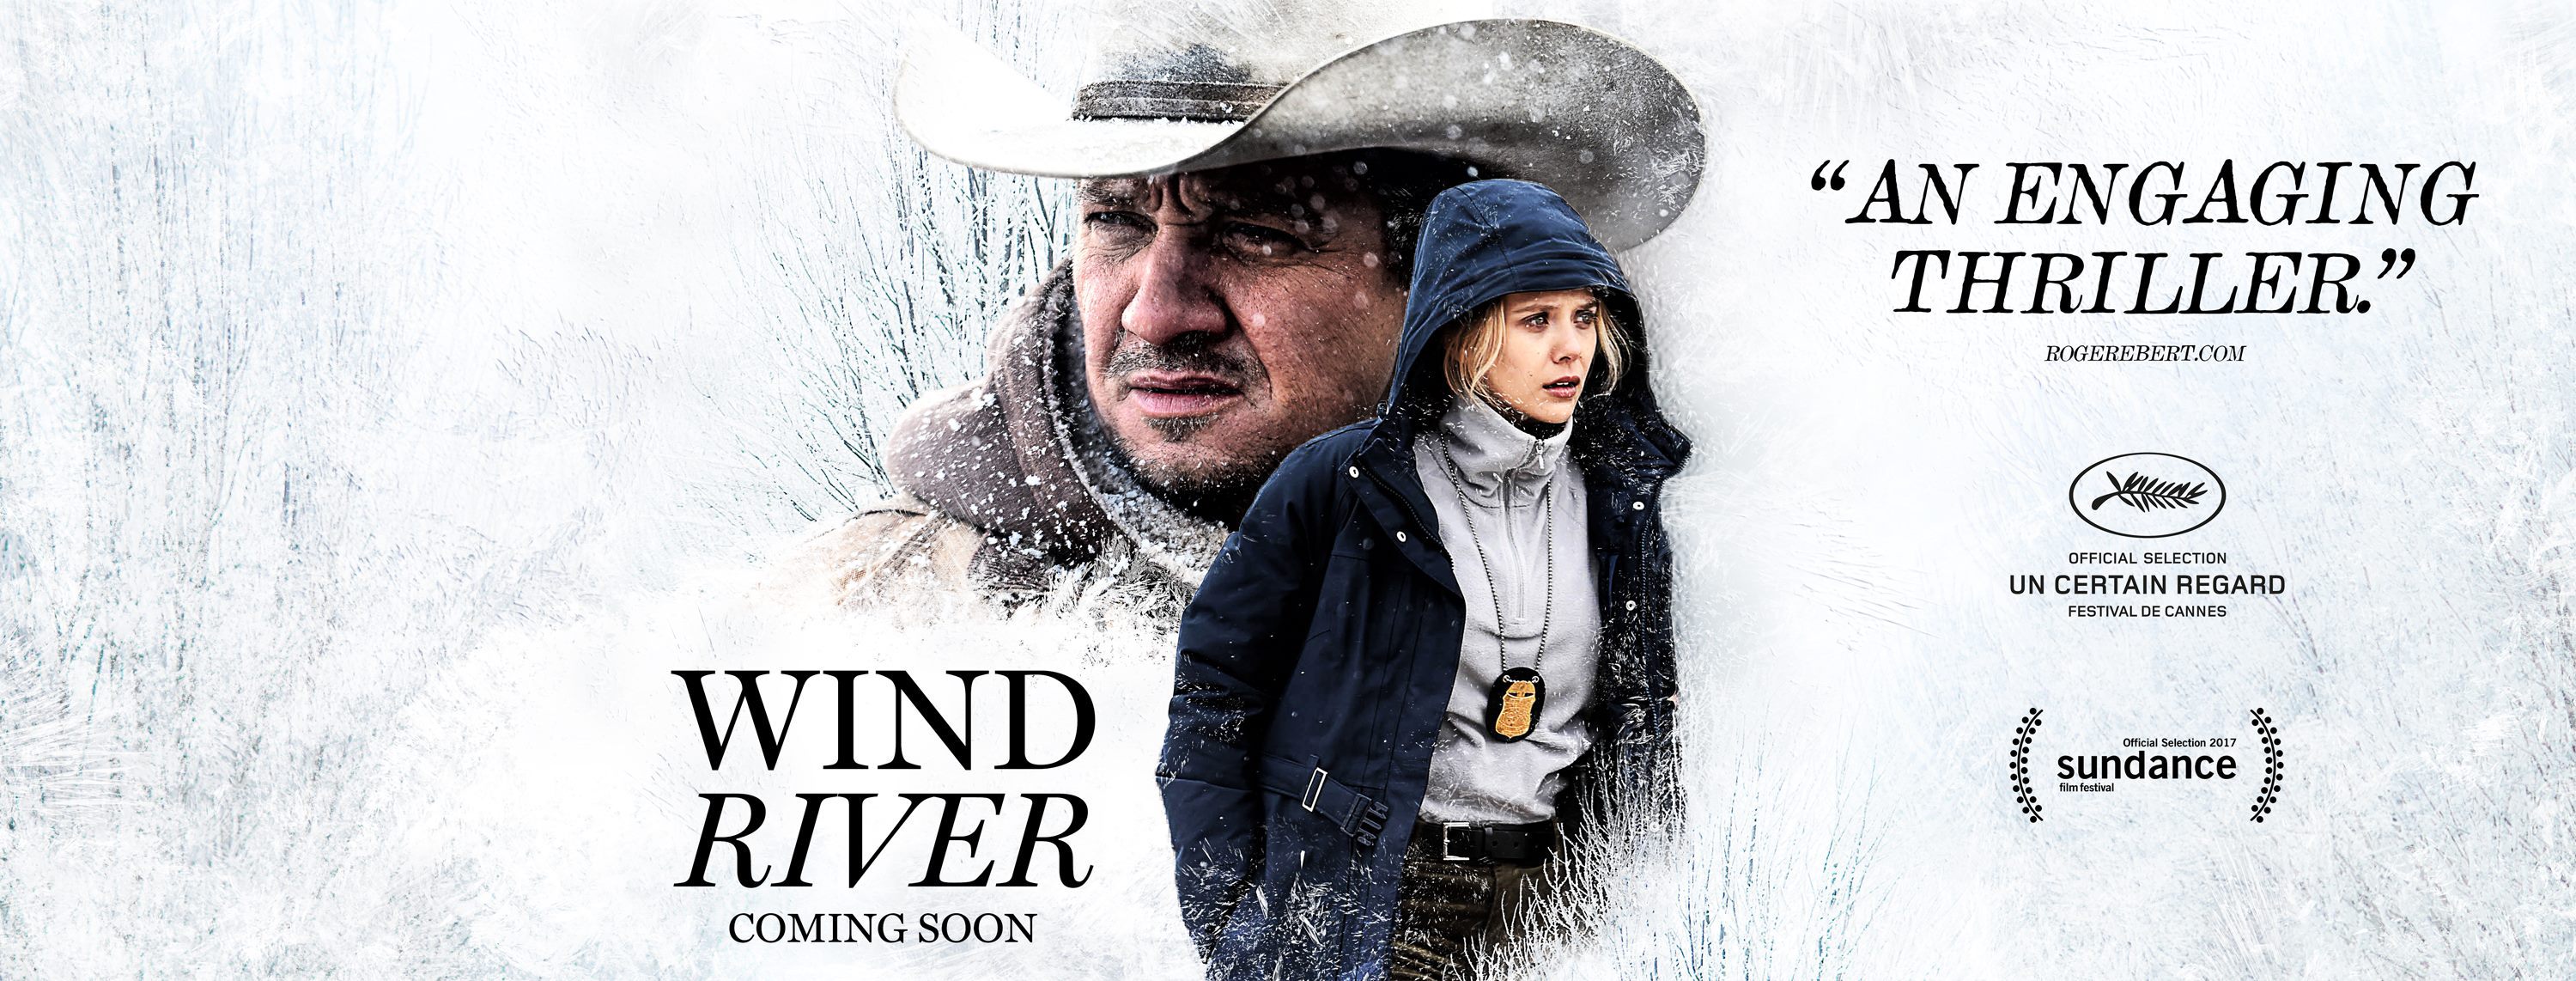 Wind-River-movie-poster.jpg